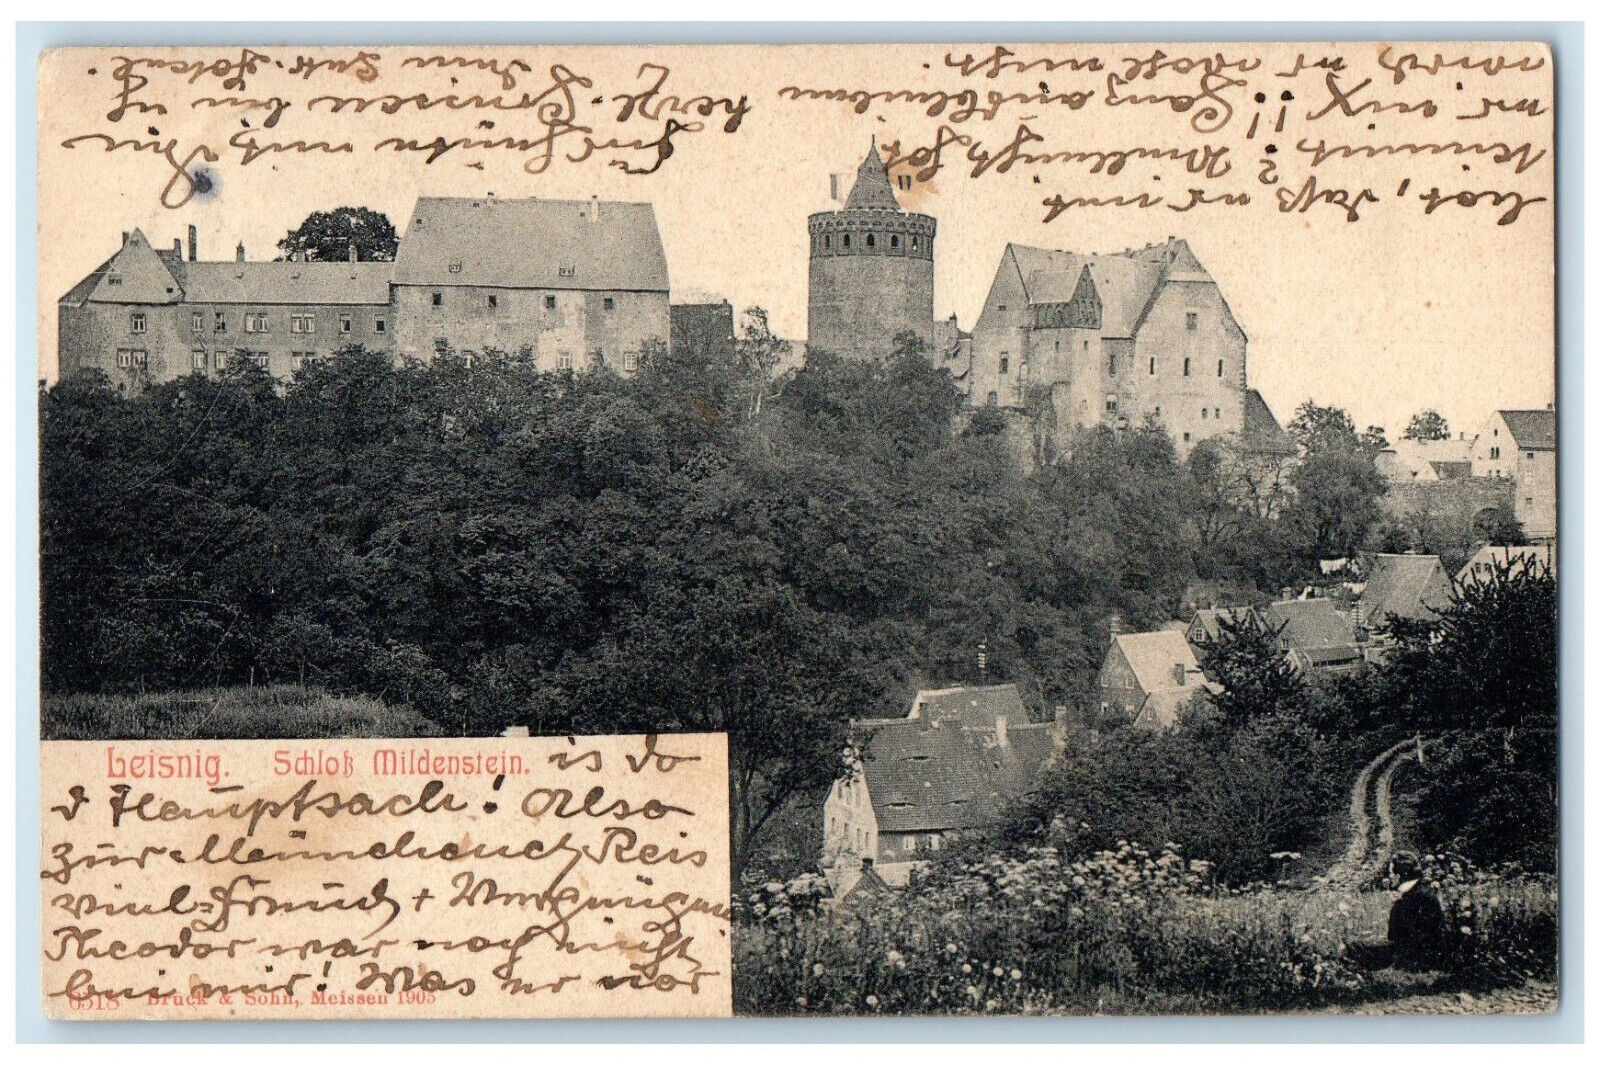 1903 Mildenstein Castle Leisnig Saxony Germany Posted Antique Postcard